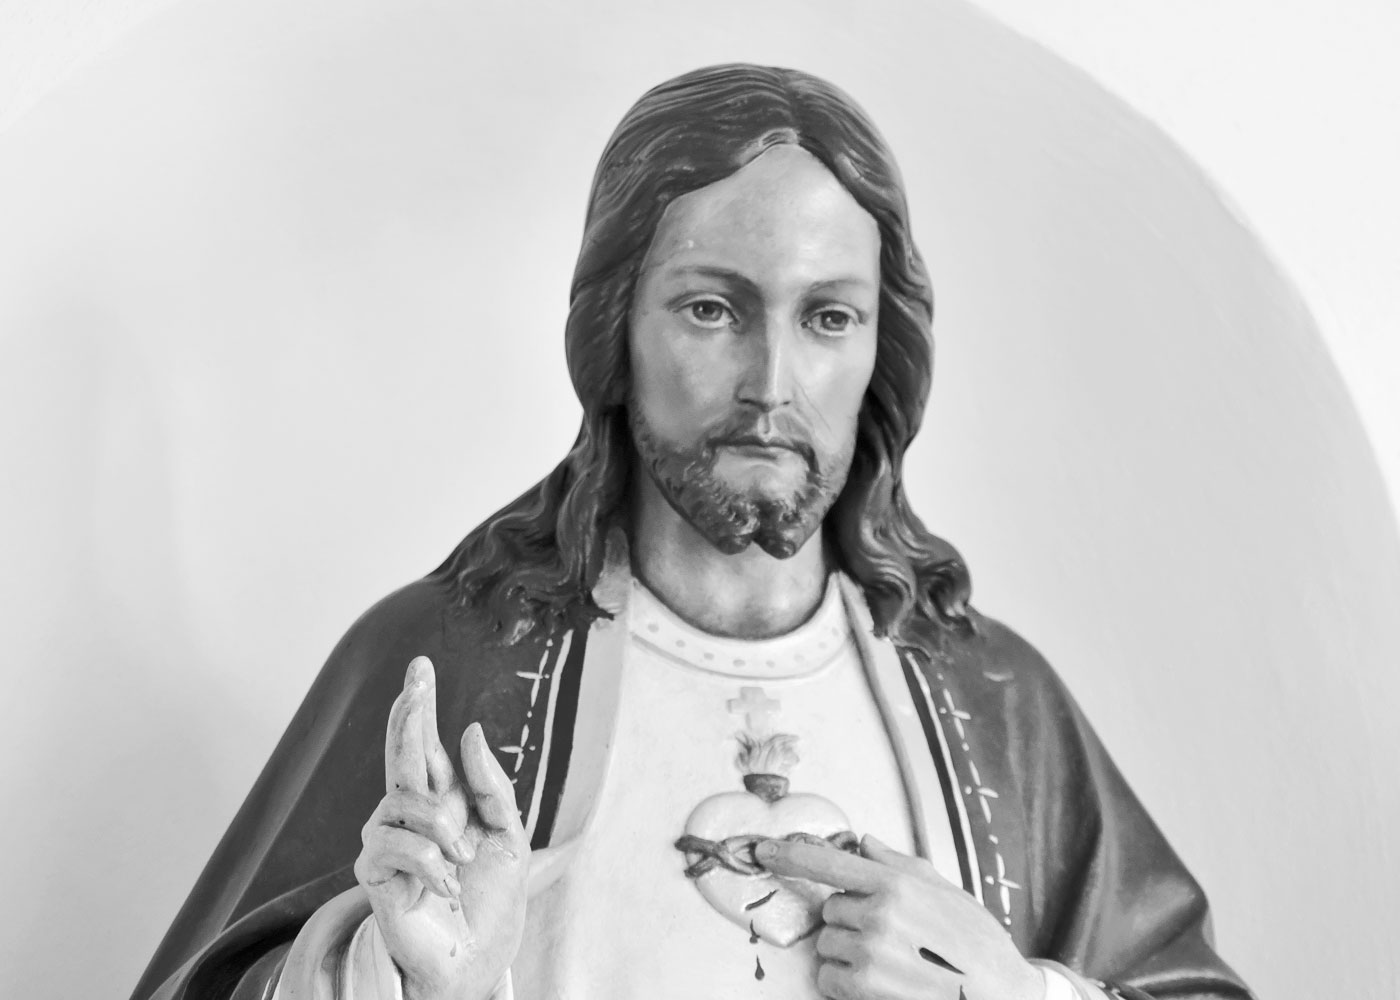 Jesus Figur